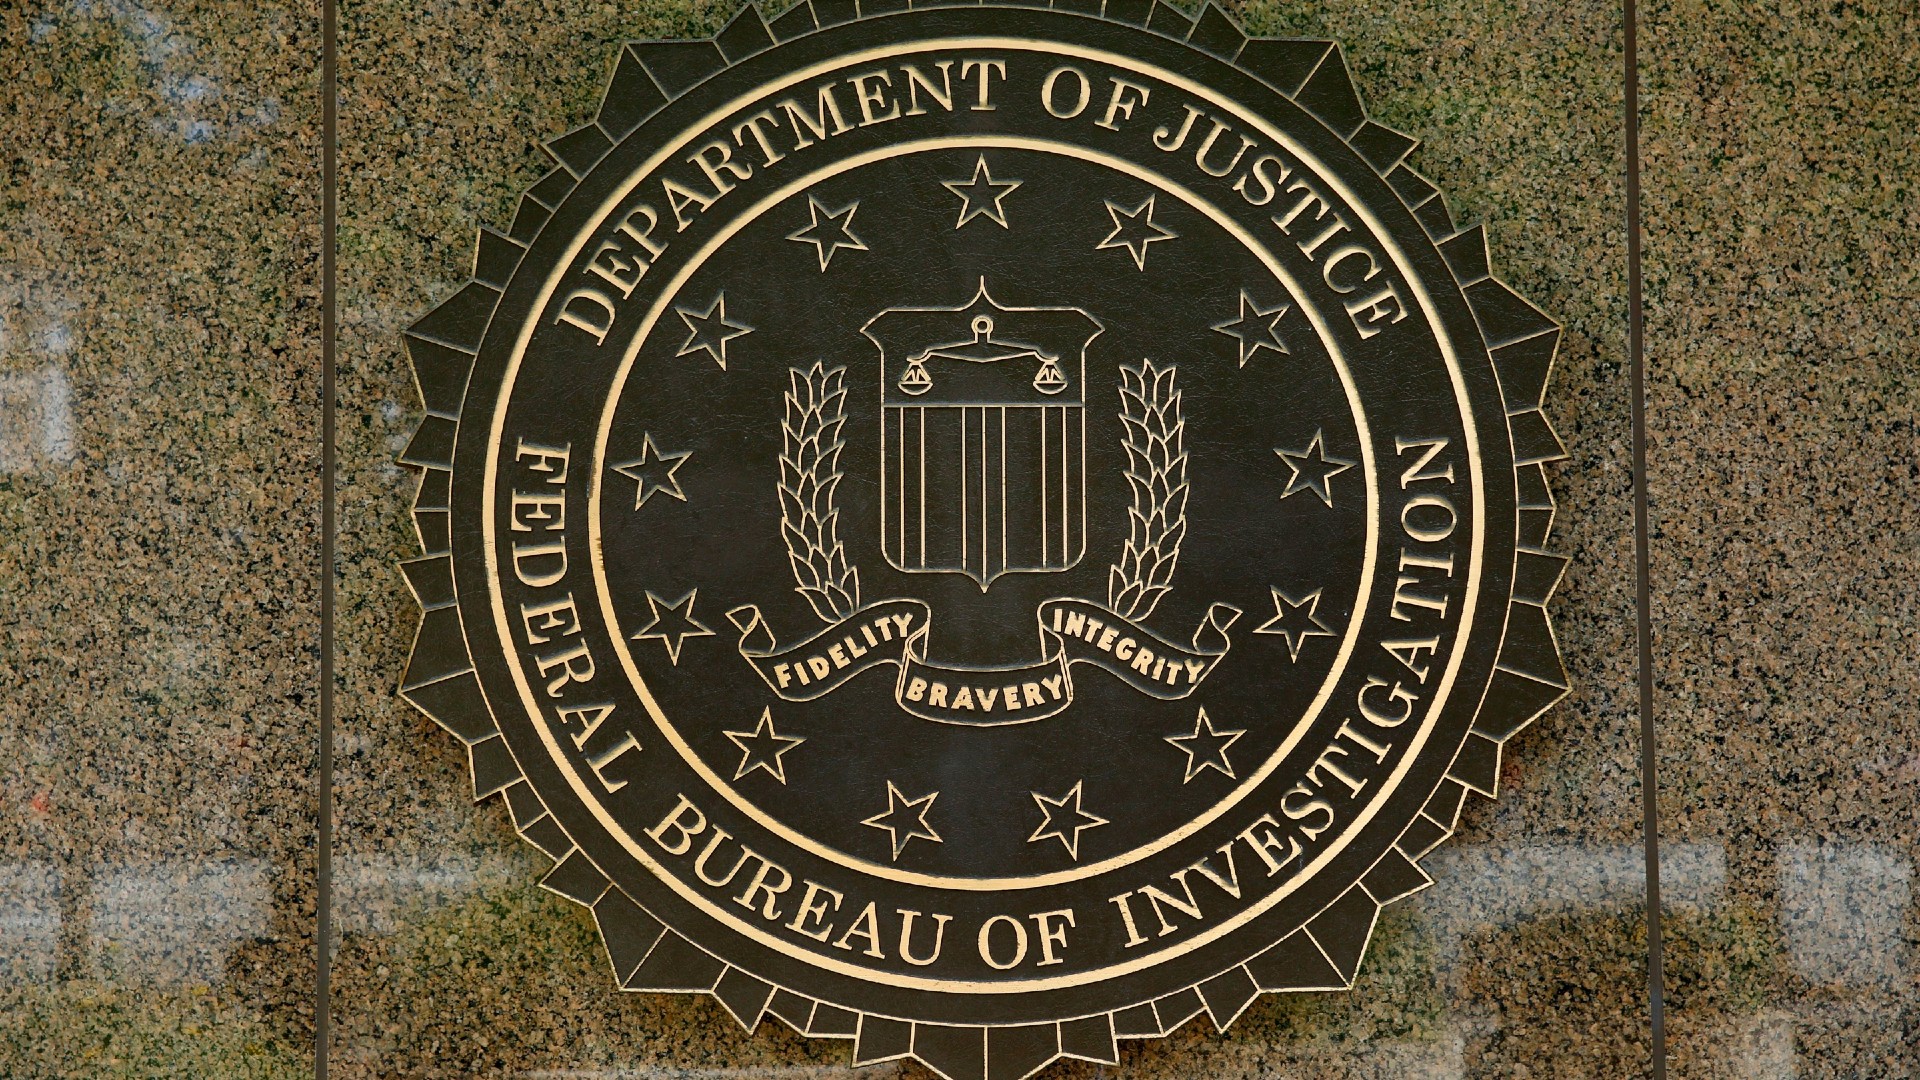 Former FBI Agent Seeking Probation After Admitting to Destroying Evidence